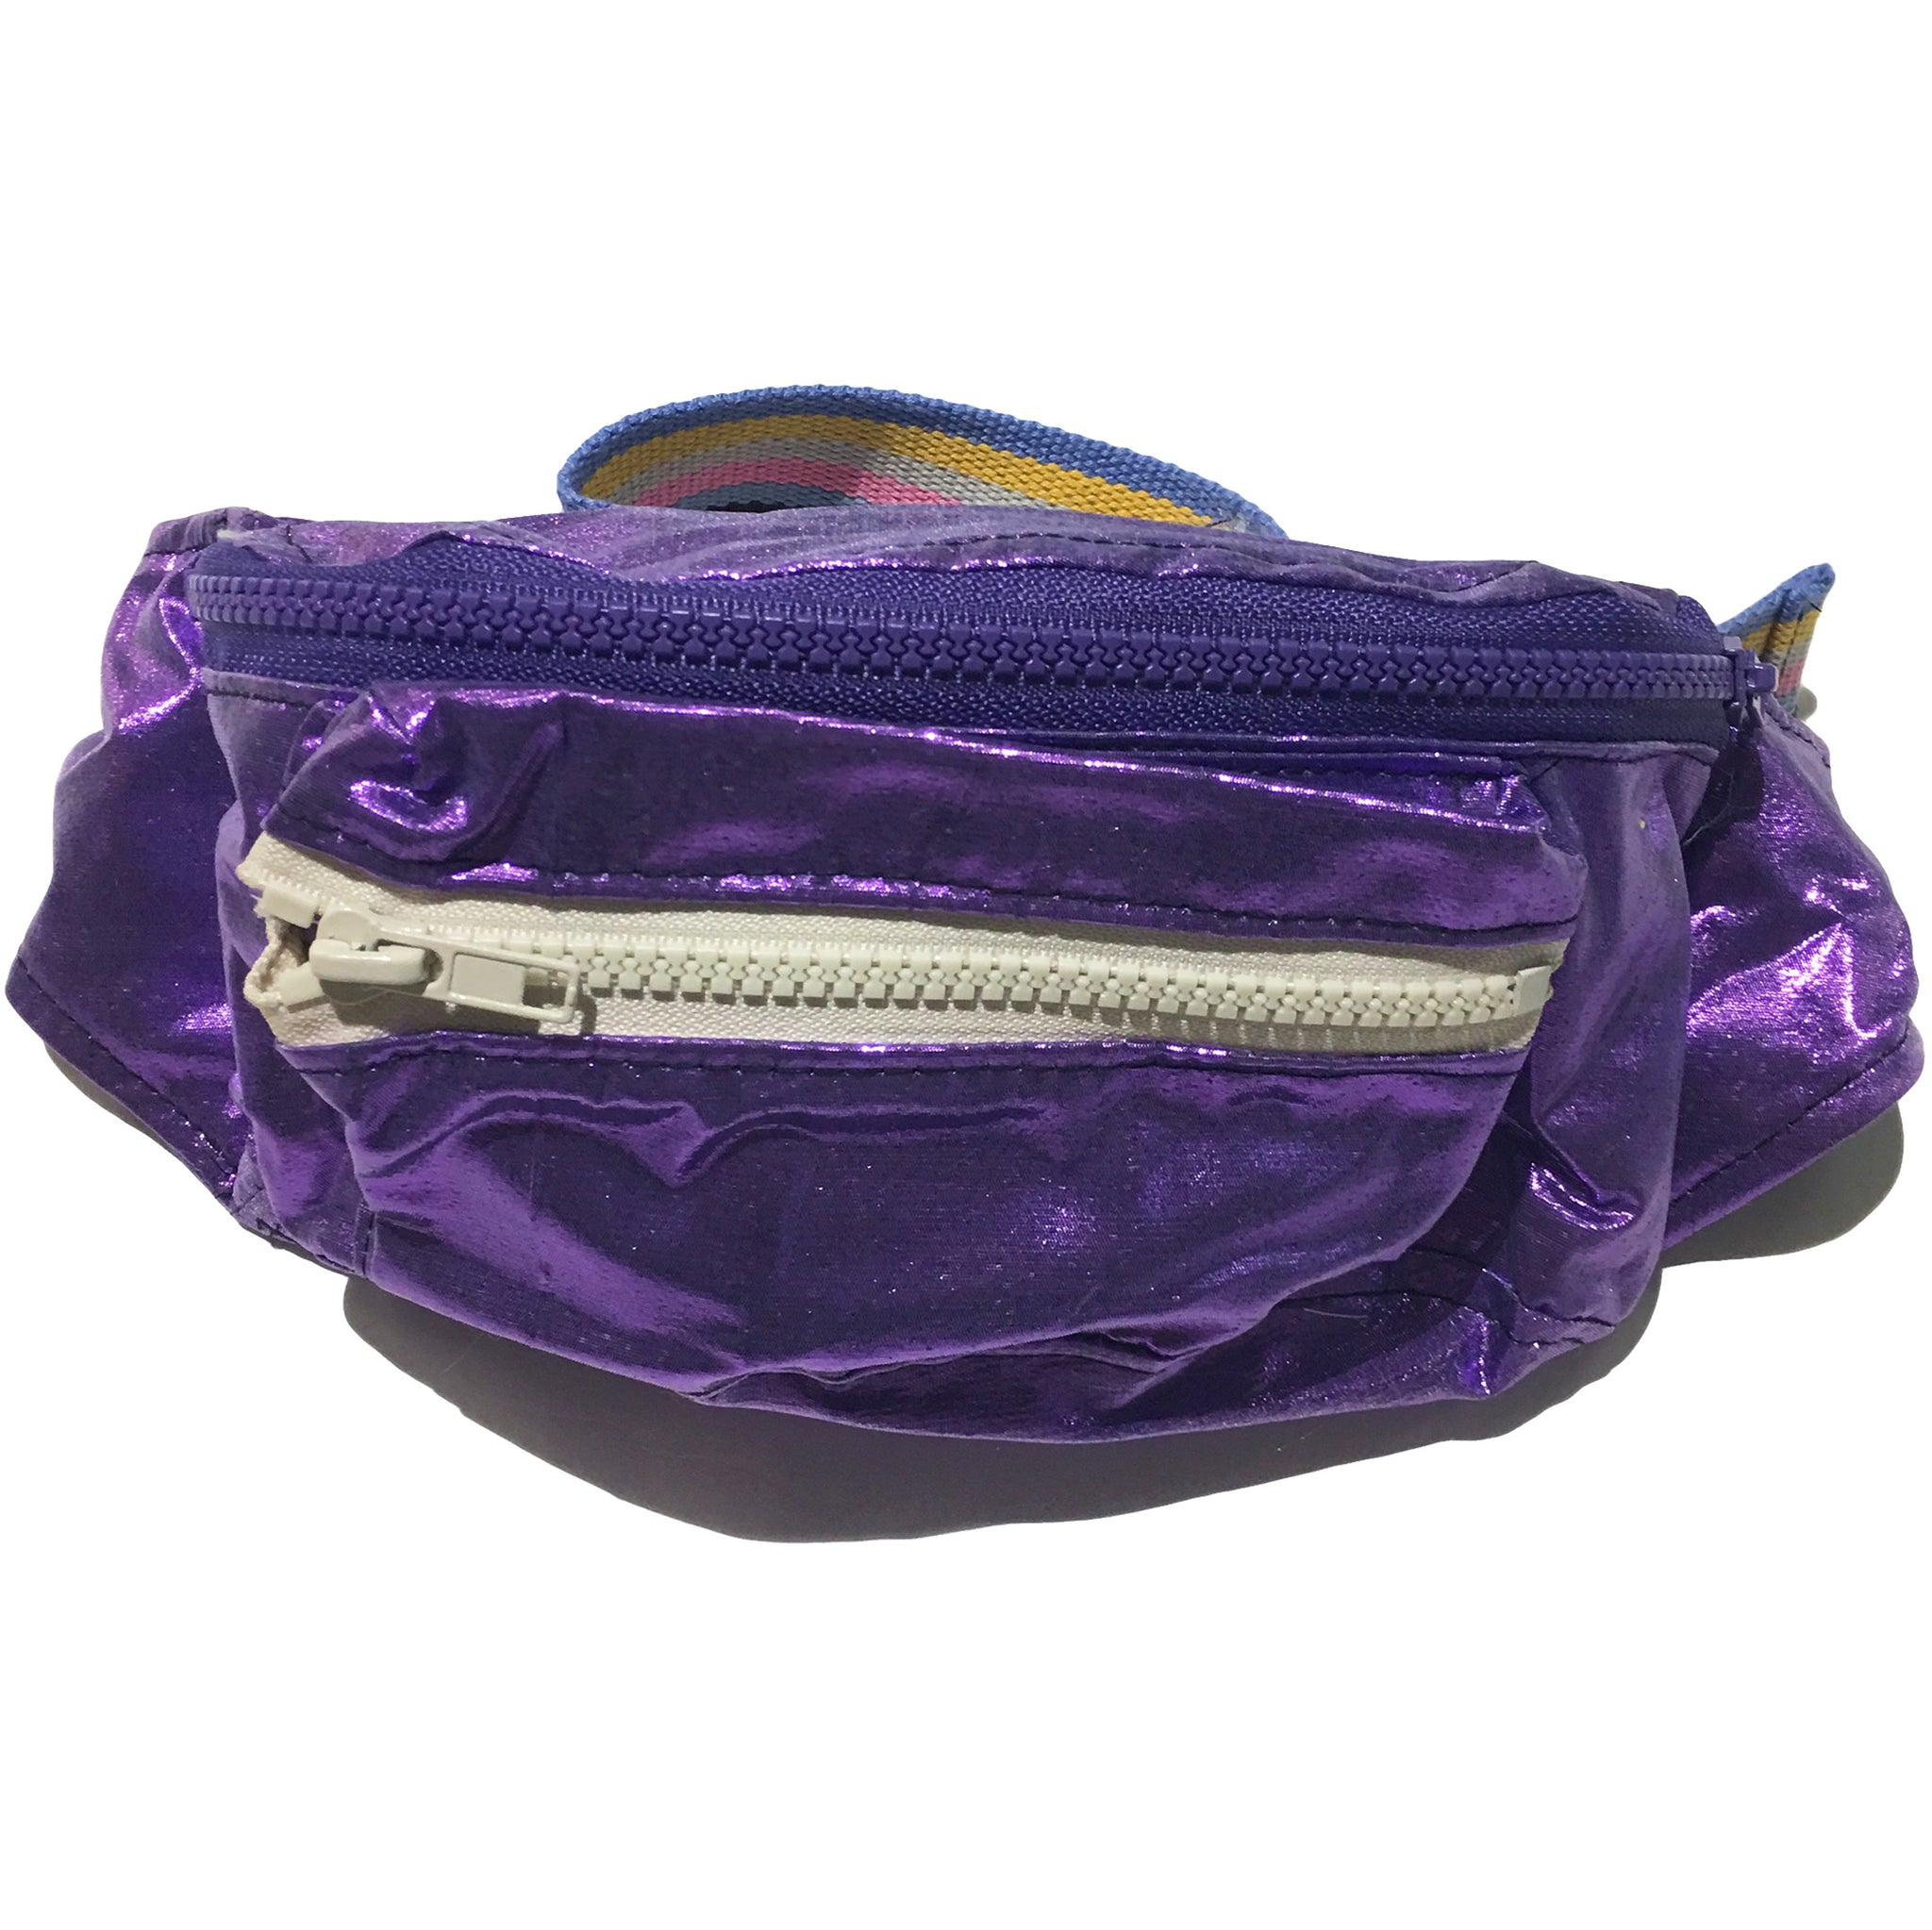 Blim Purple Shimmery Fanny Pack